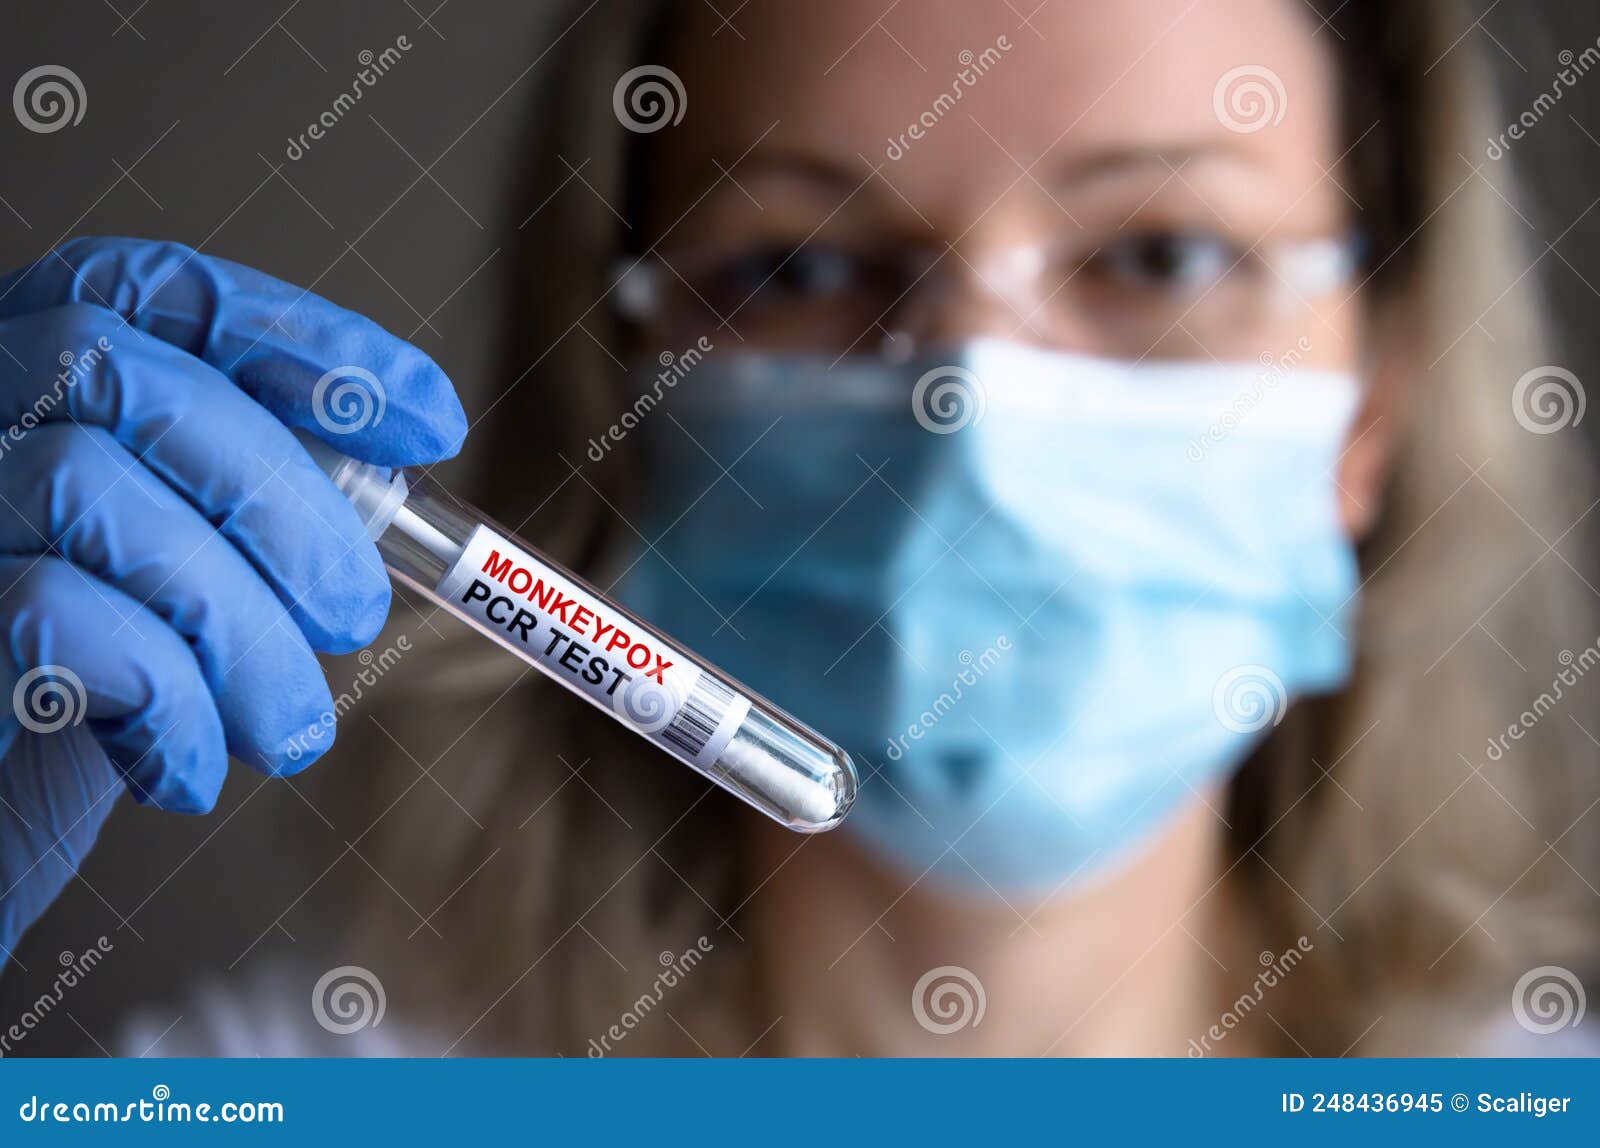 monkeypox pcr test tube in doctors hand